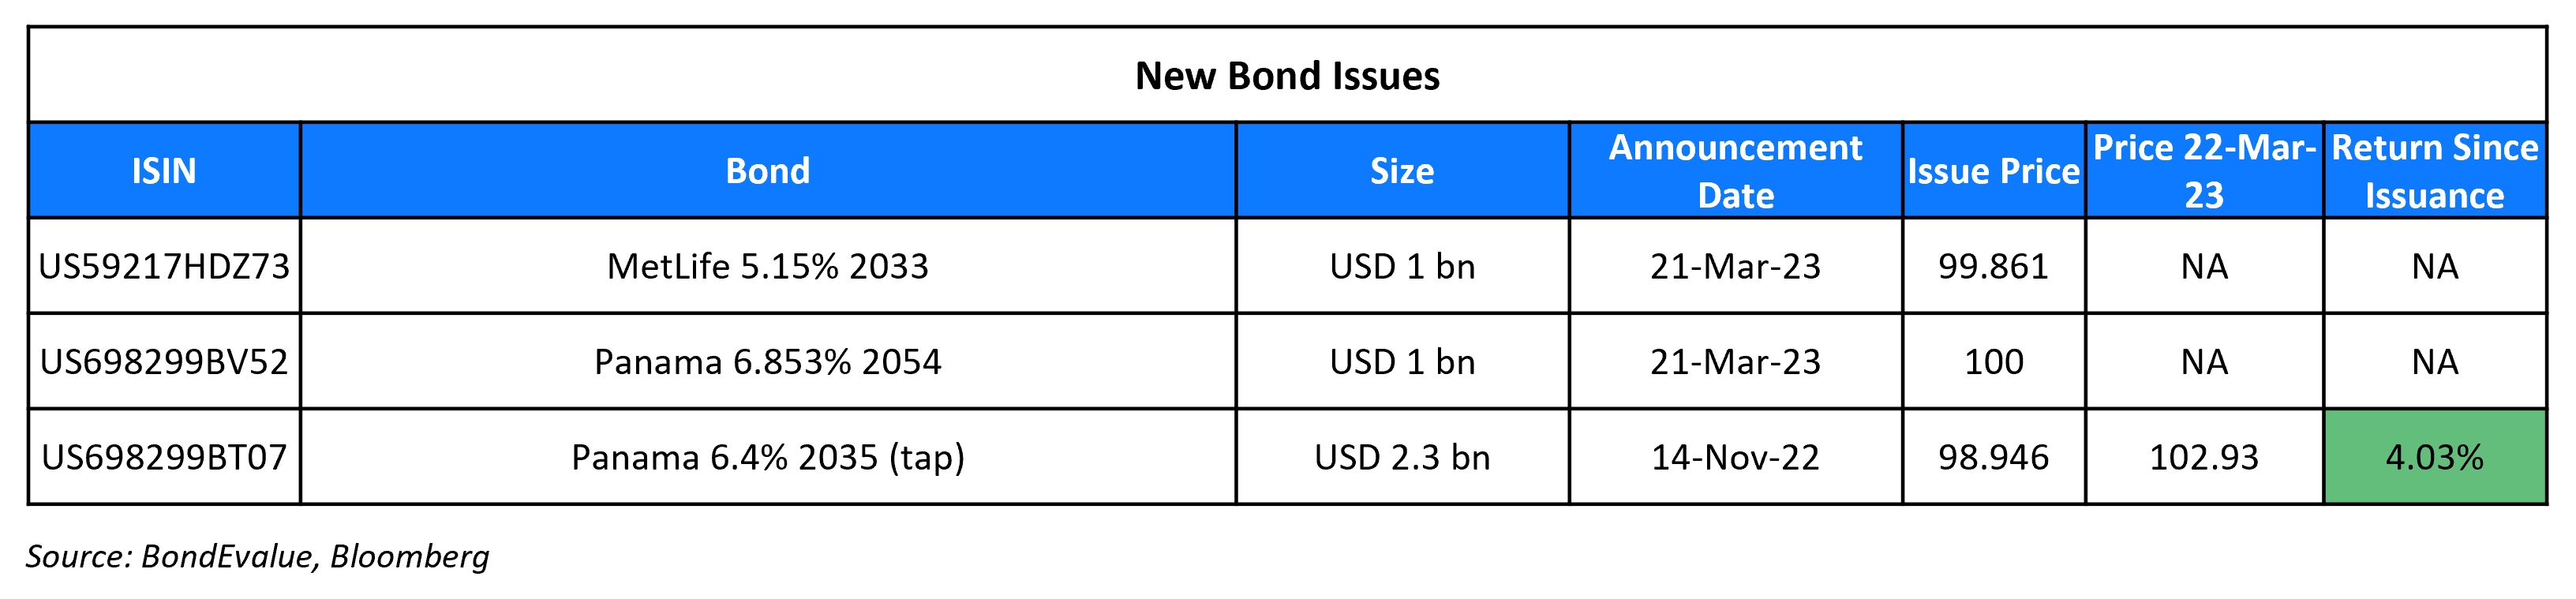 New Bond Issues 22 Mar 23